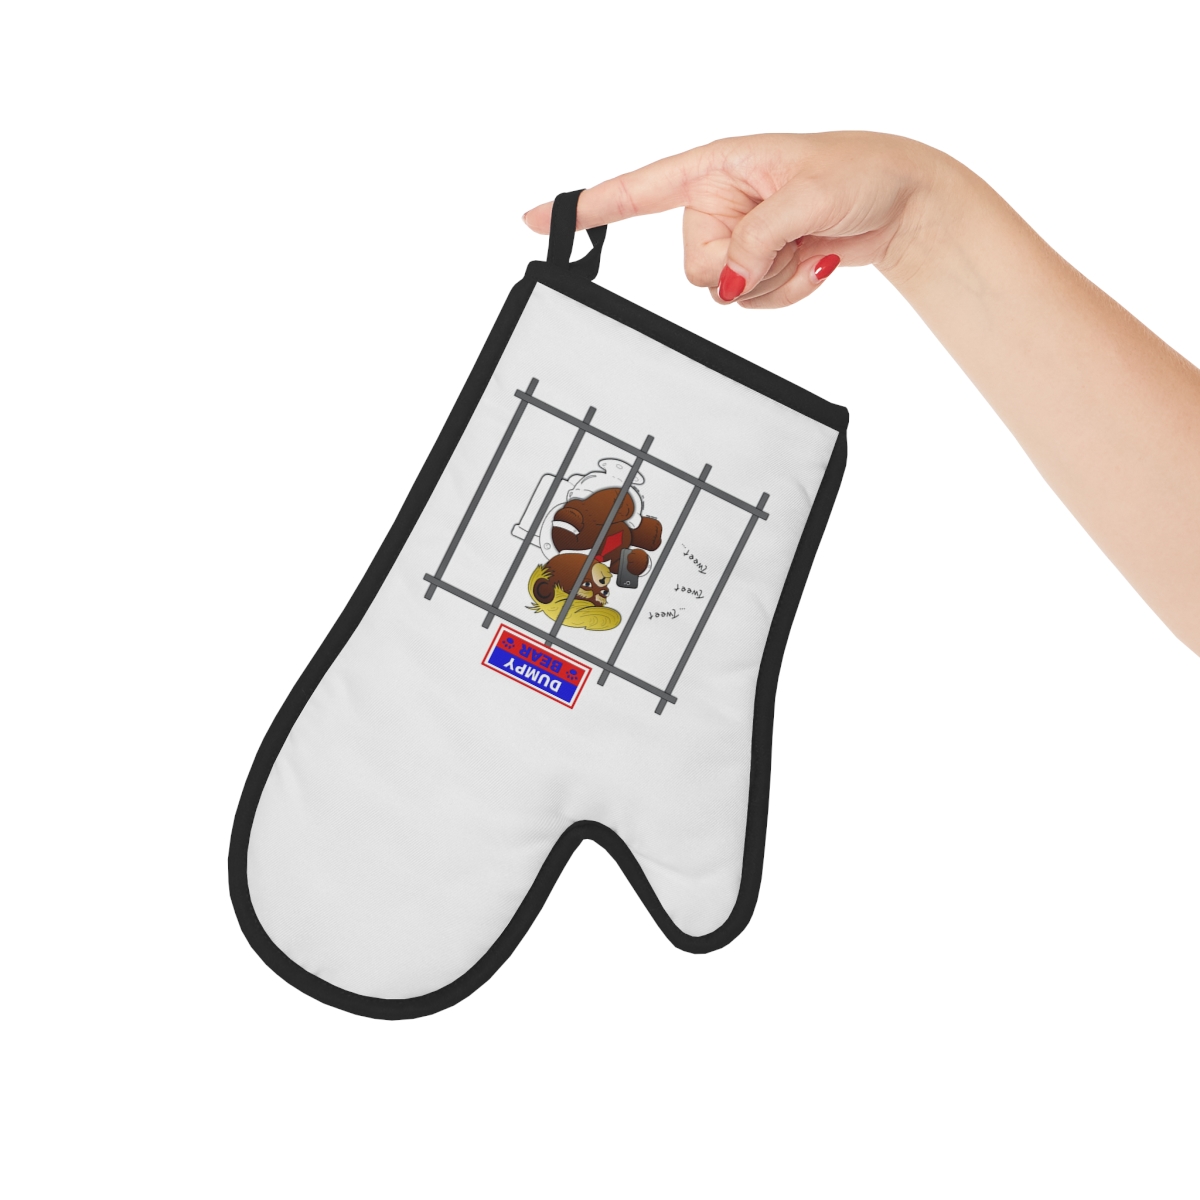 Dumpy Bear Tweeting on Toilet Behind Bars - Oven Glove product thumbnail image